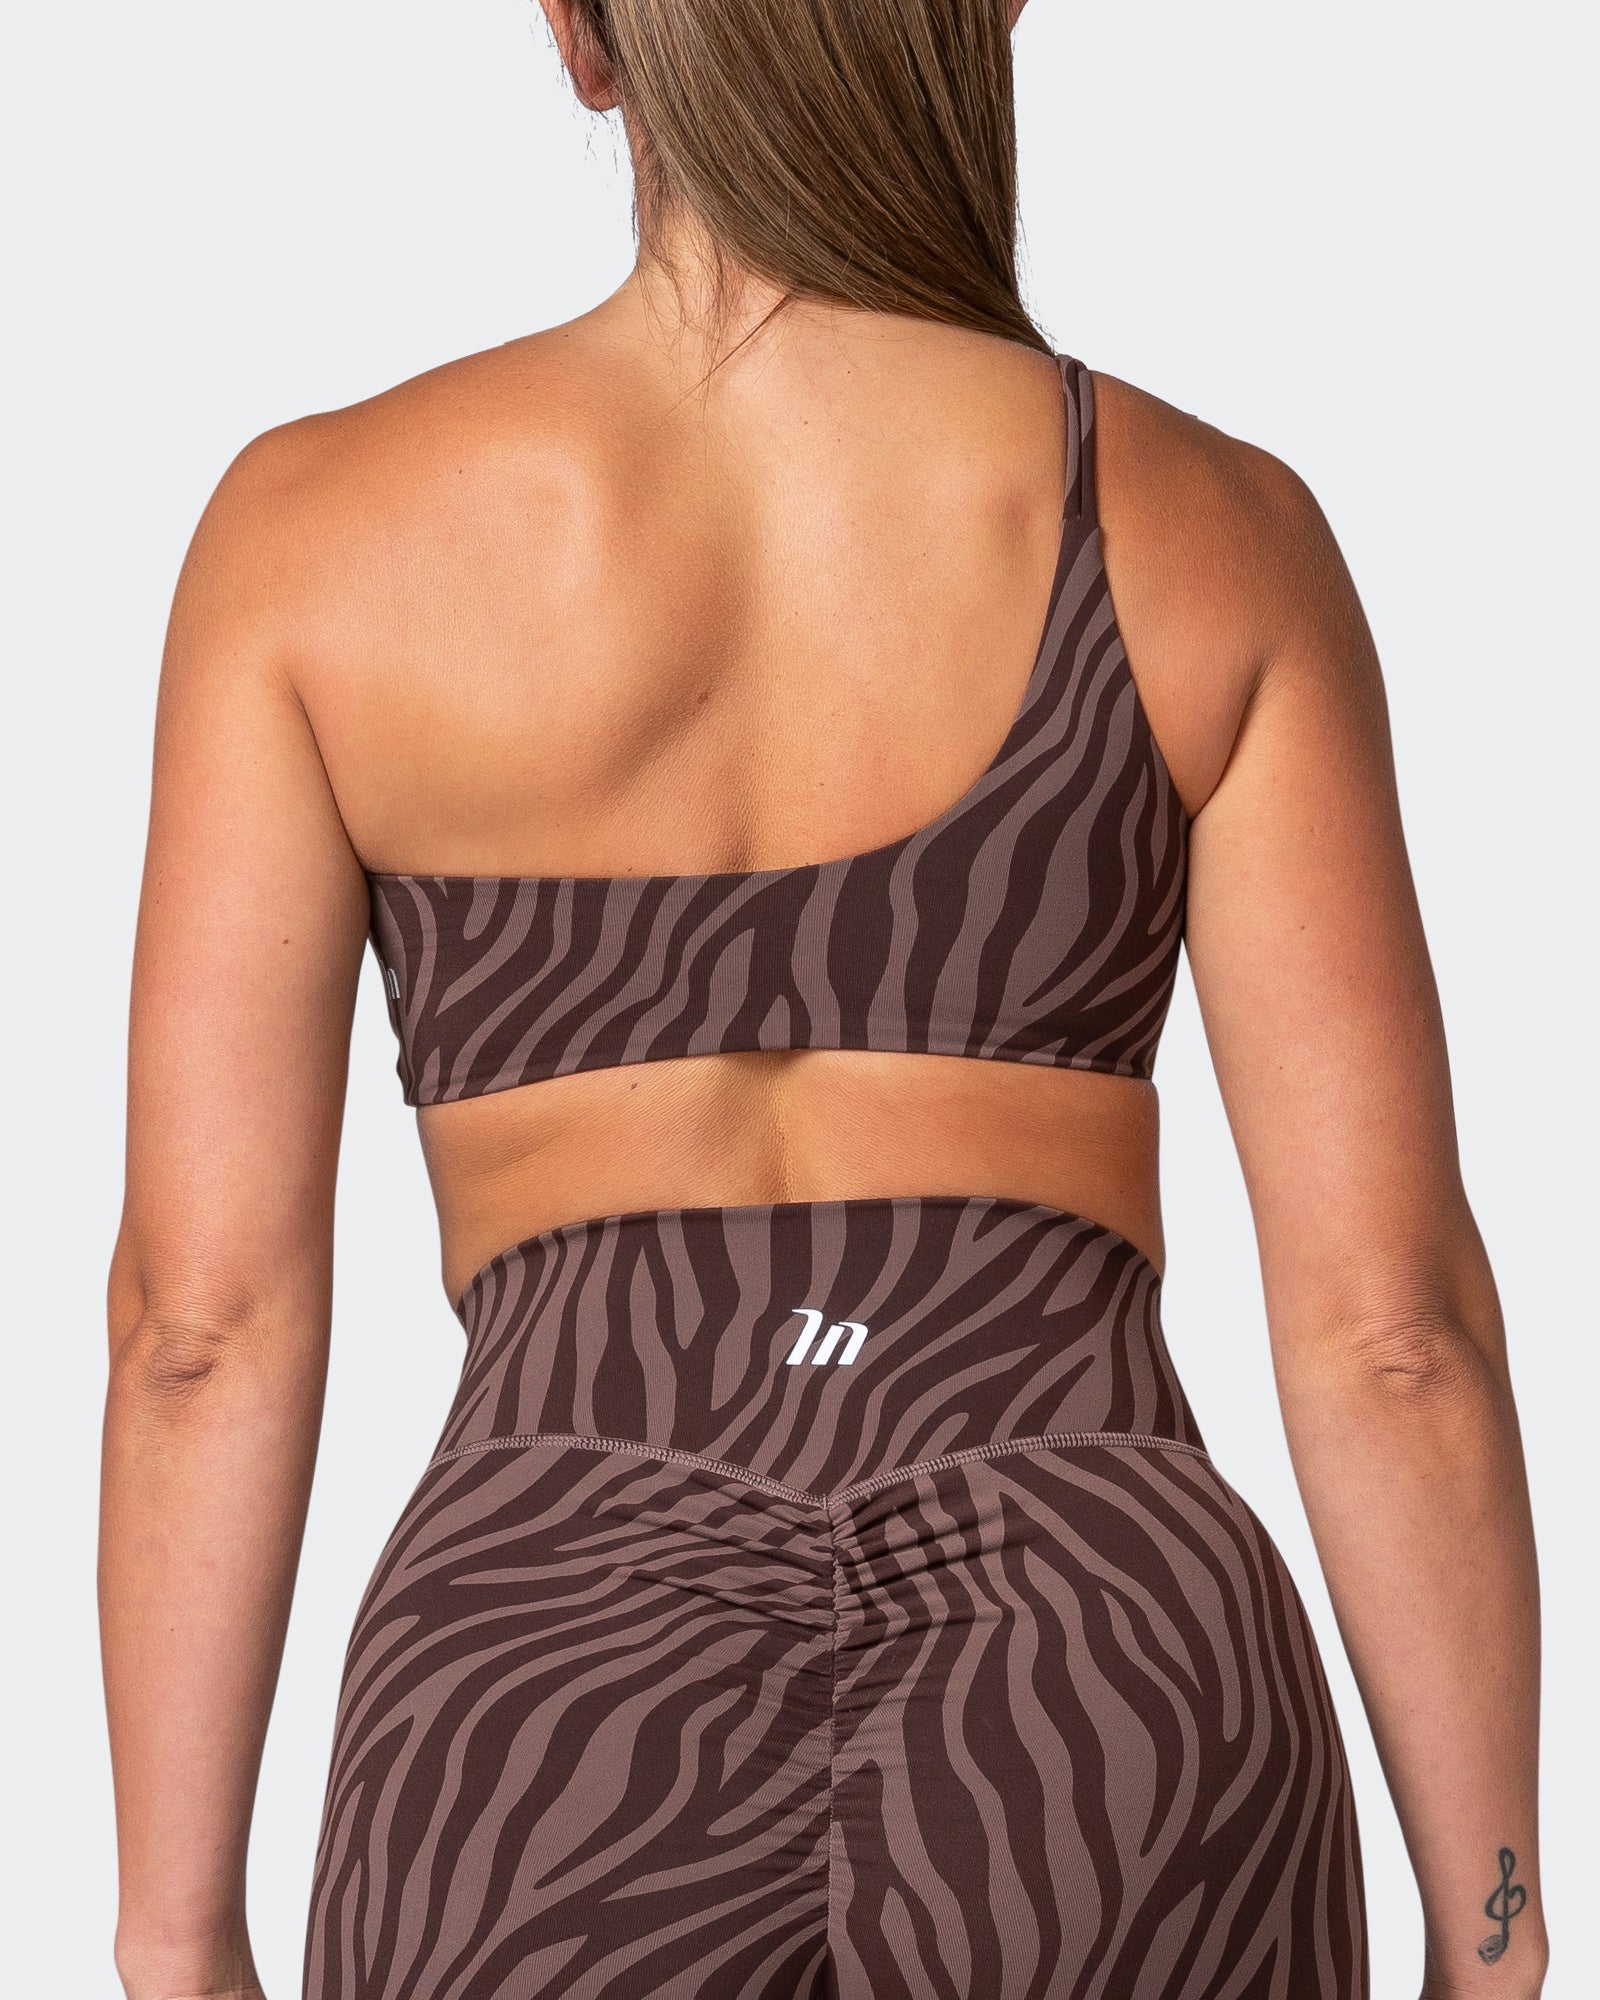 musclenation Sports Bras Movement One Shoulder Bralette - Coffee Zebra Print